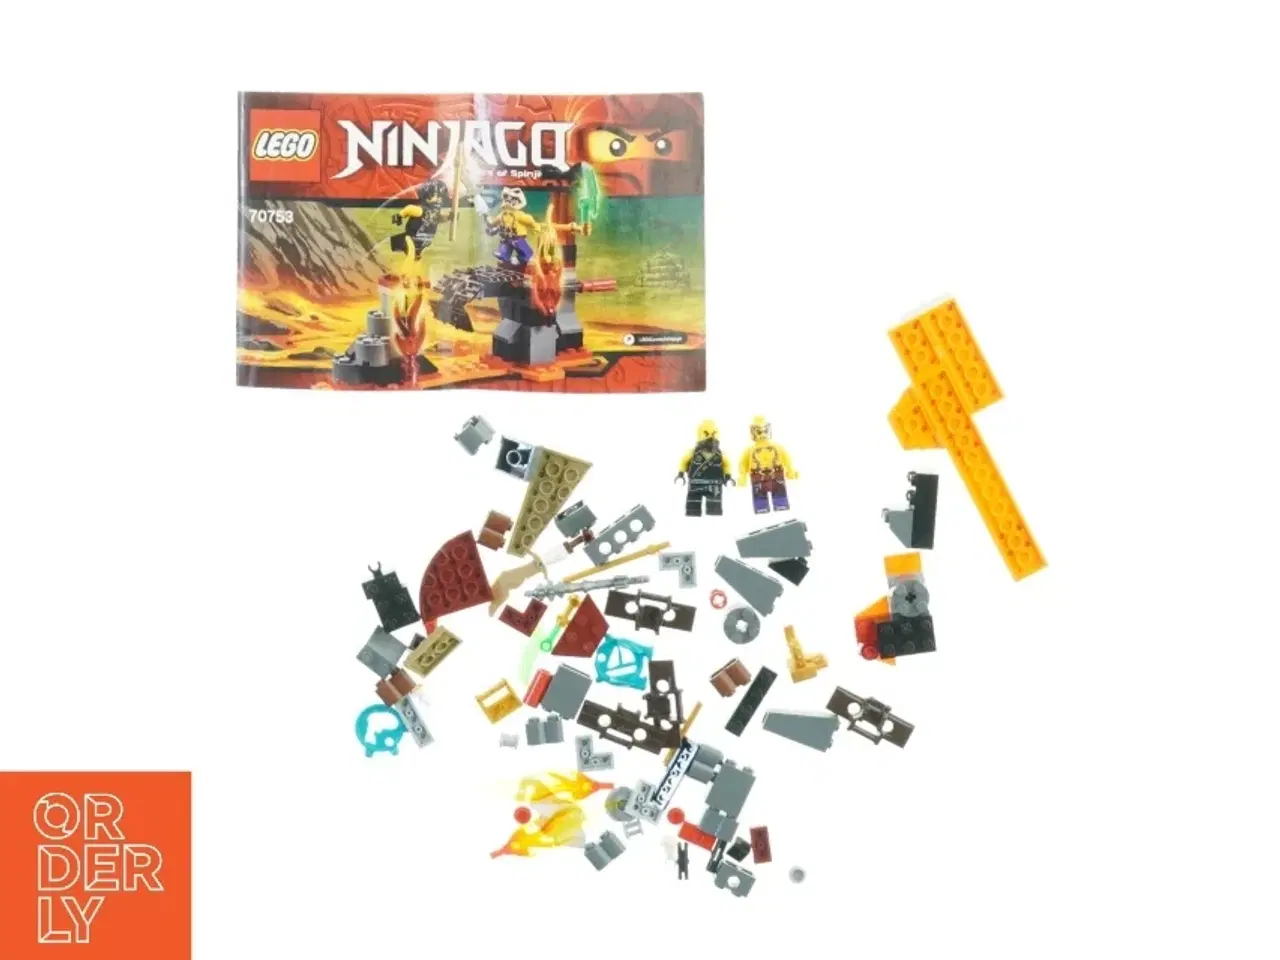 Billede 1 - Lego ninjago 70753 fra Lego (str. 20 cm)